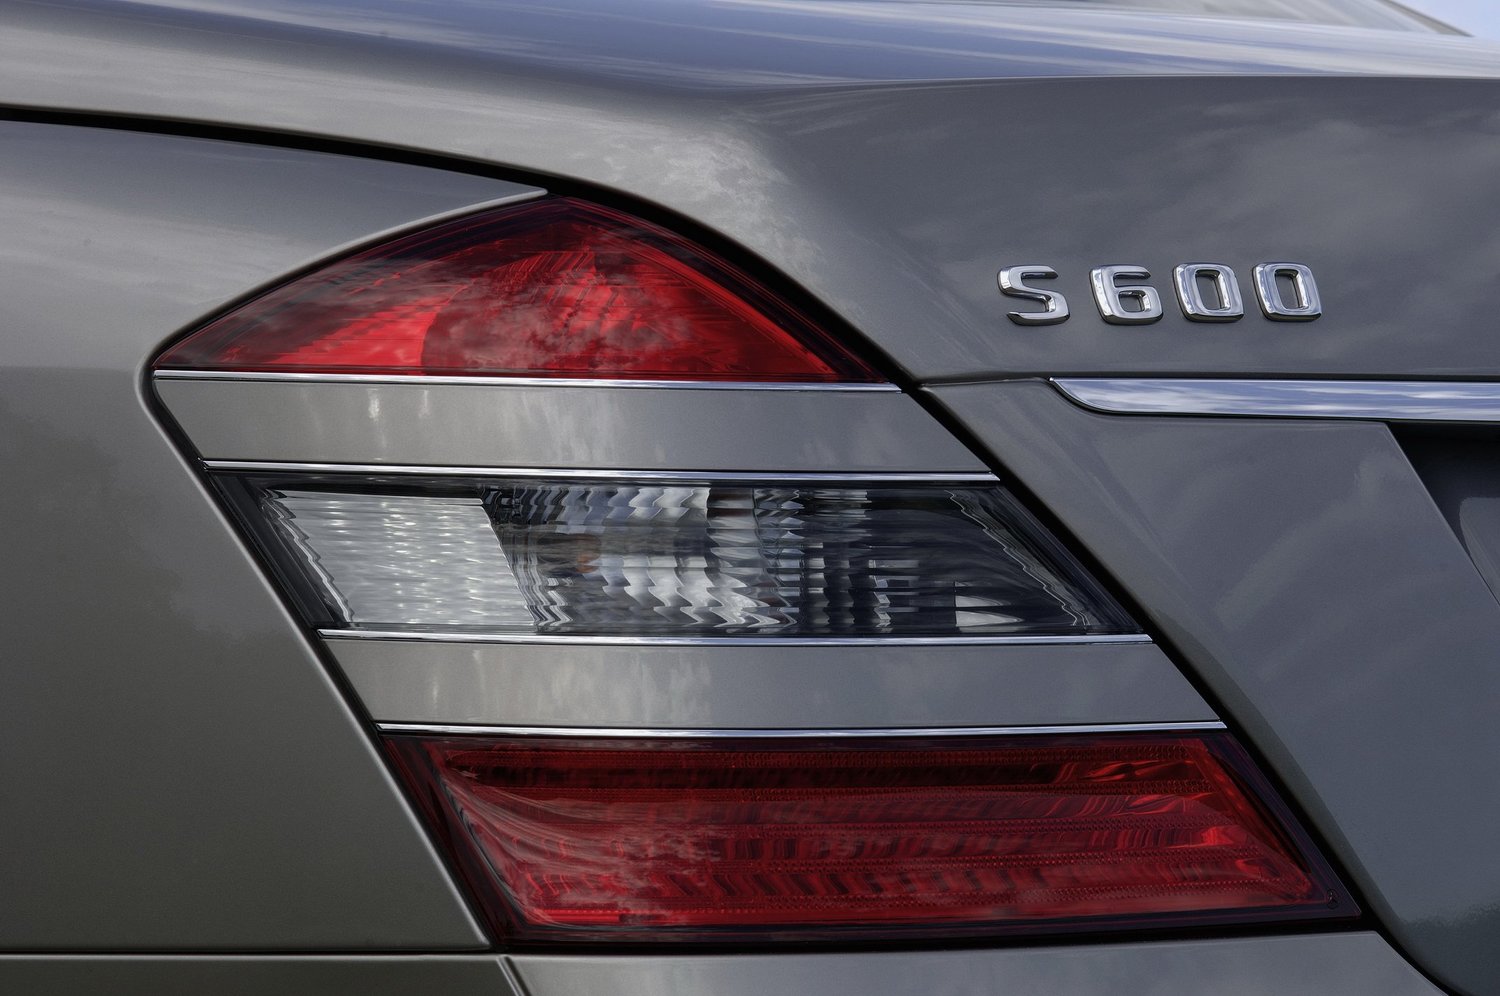 седан Long Mercedes-Benz S-klasse 2005 - 2009г выпуска модификация 3.0 AT (231 л.с.)